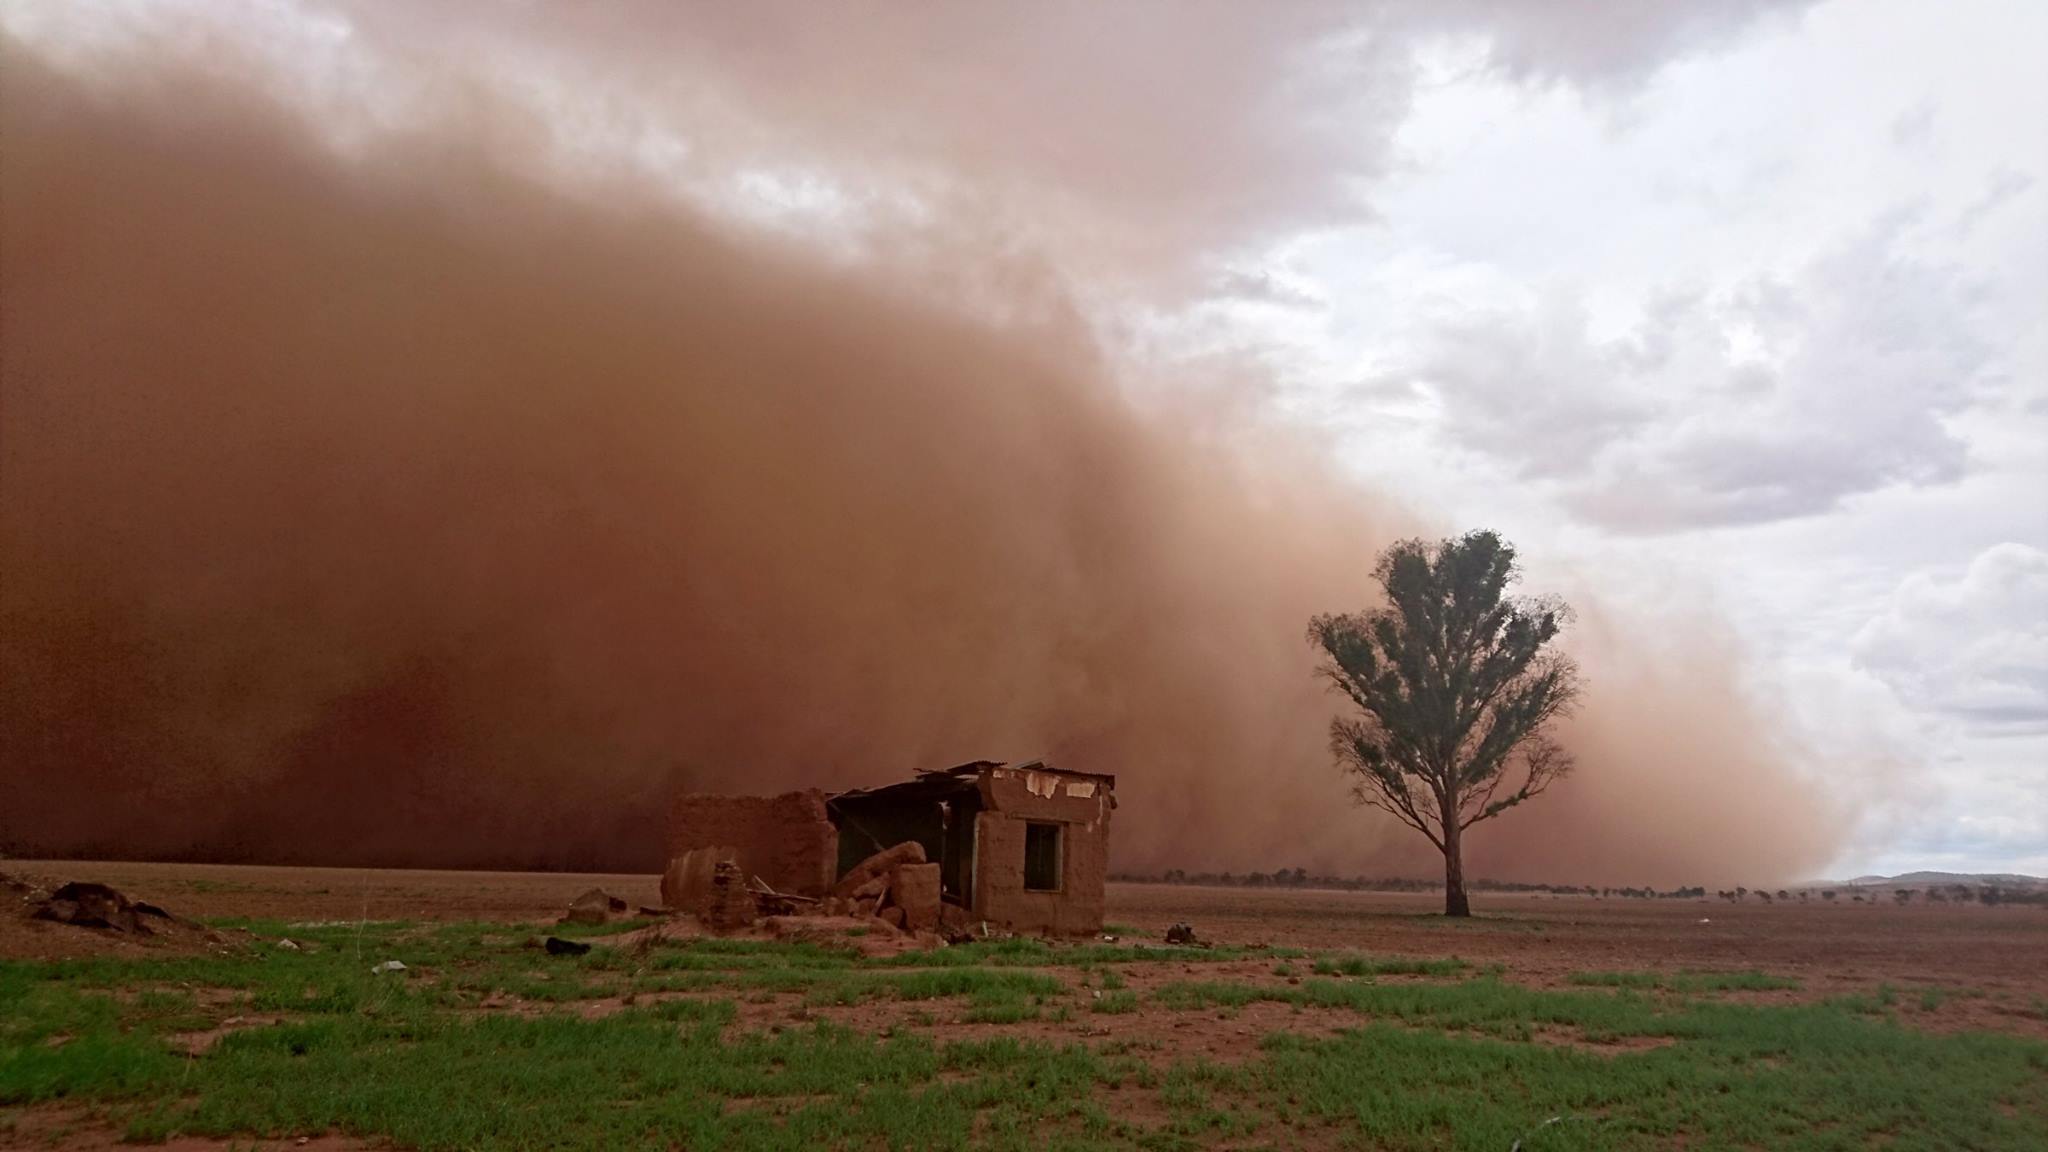 A dust storm rolls through near Freeling, South Australia, 17 March 2016. Credit: Craig Hese